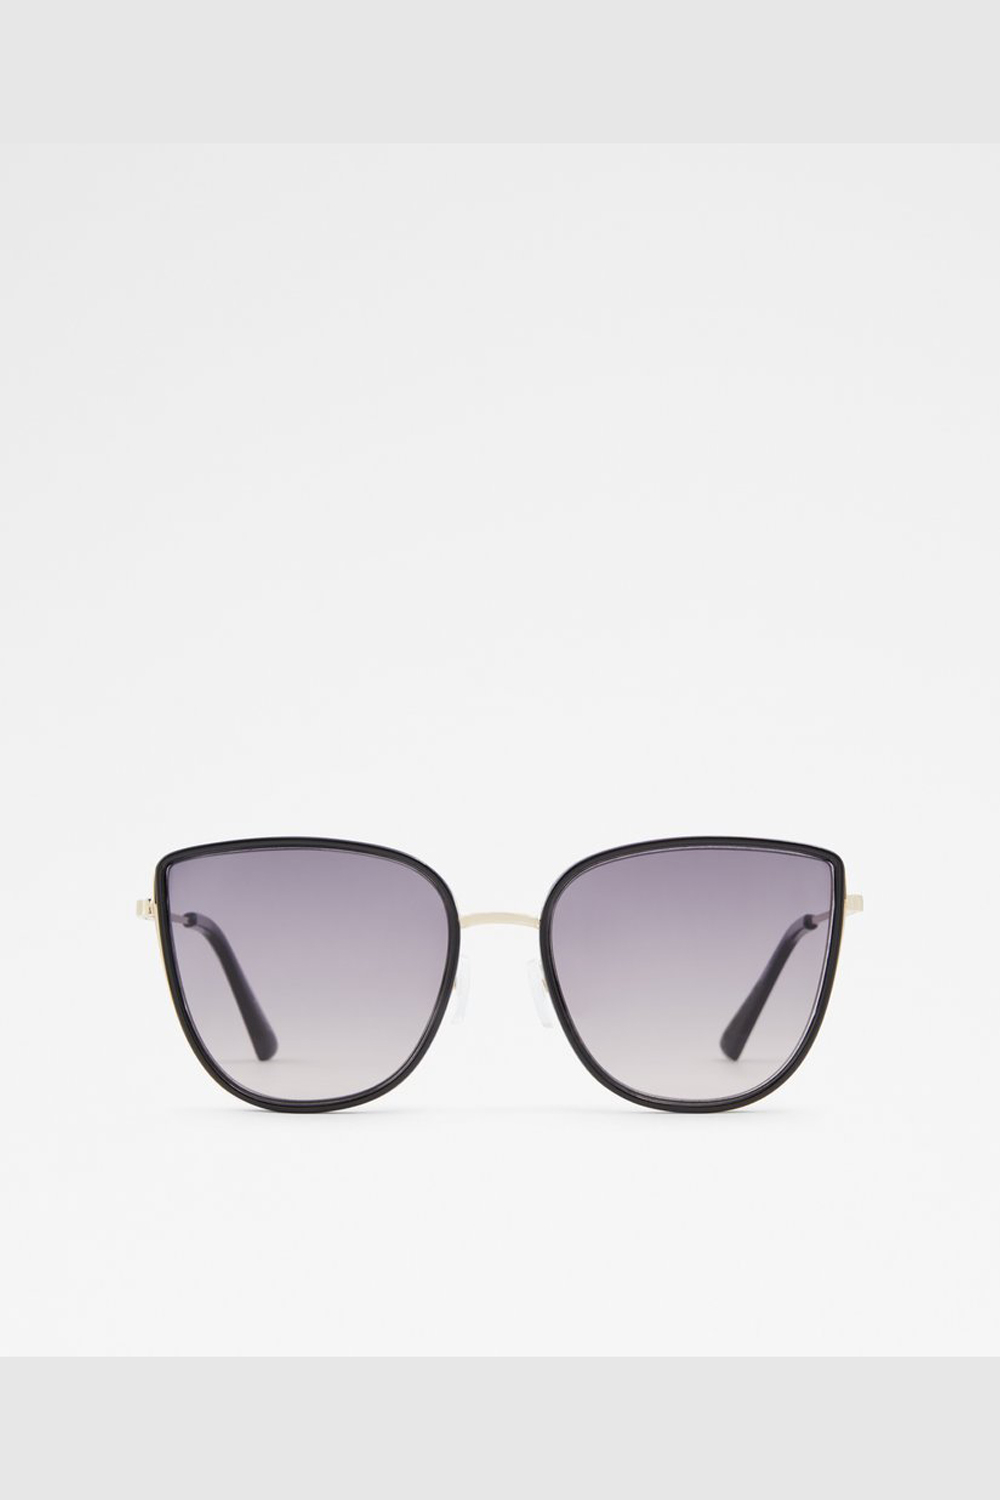 Aldo Trirelin Women'S Black/Gold Sunglasses | Odel.lk